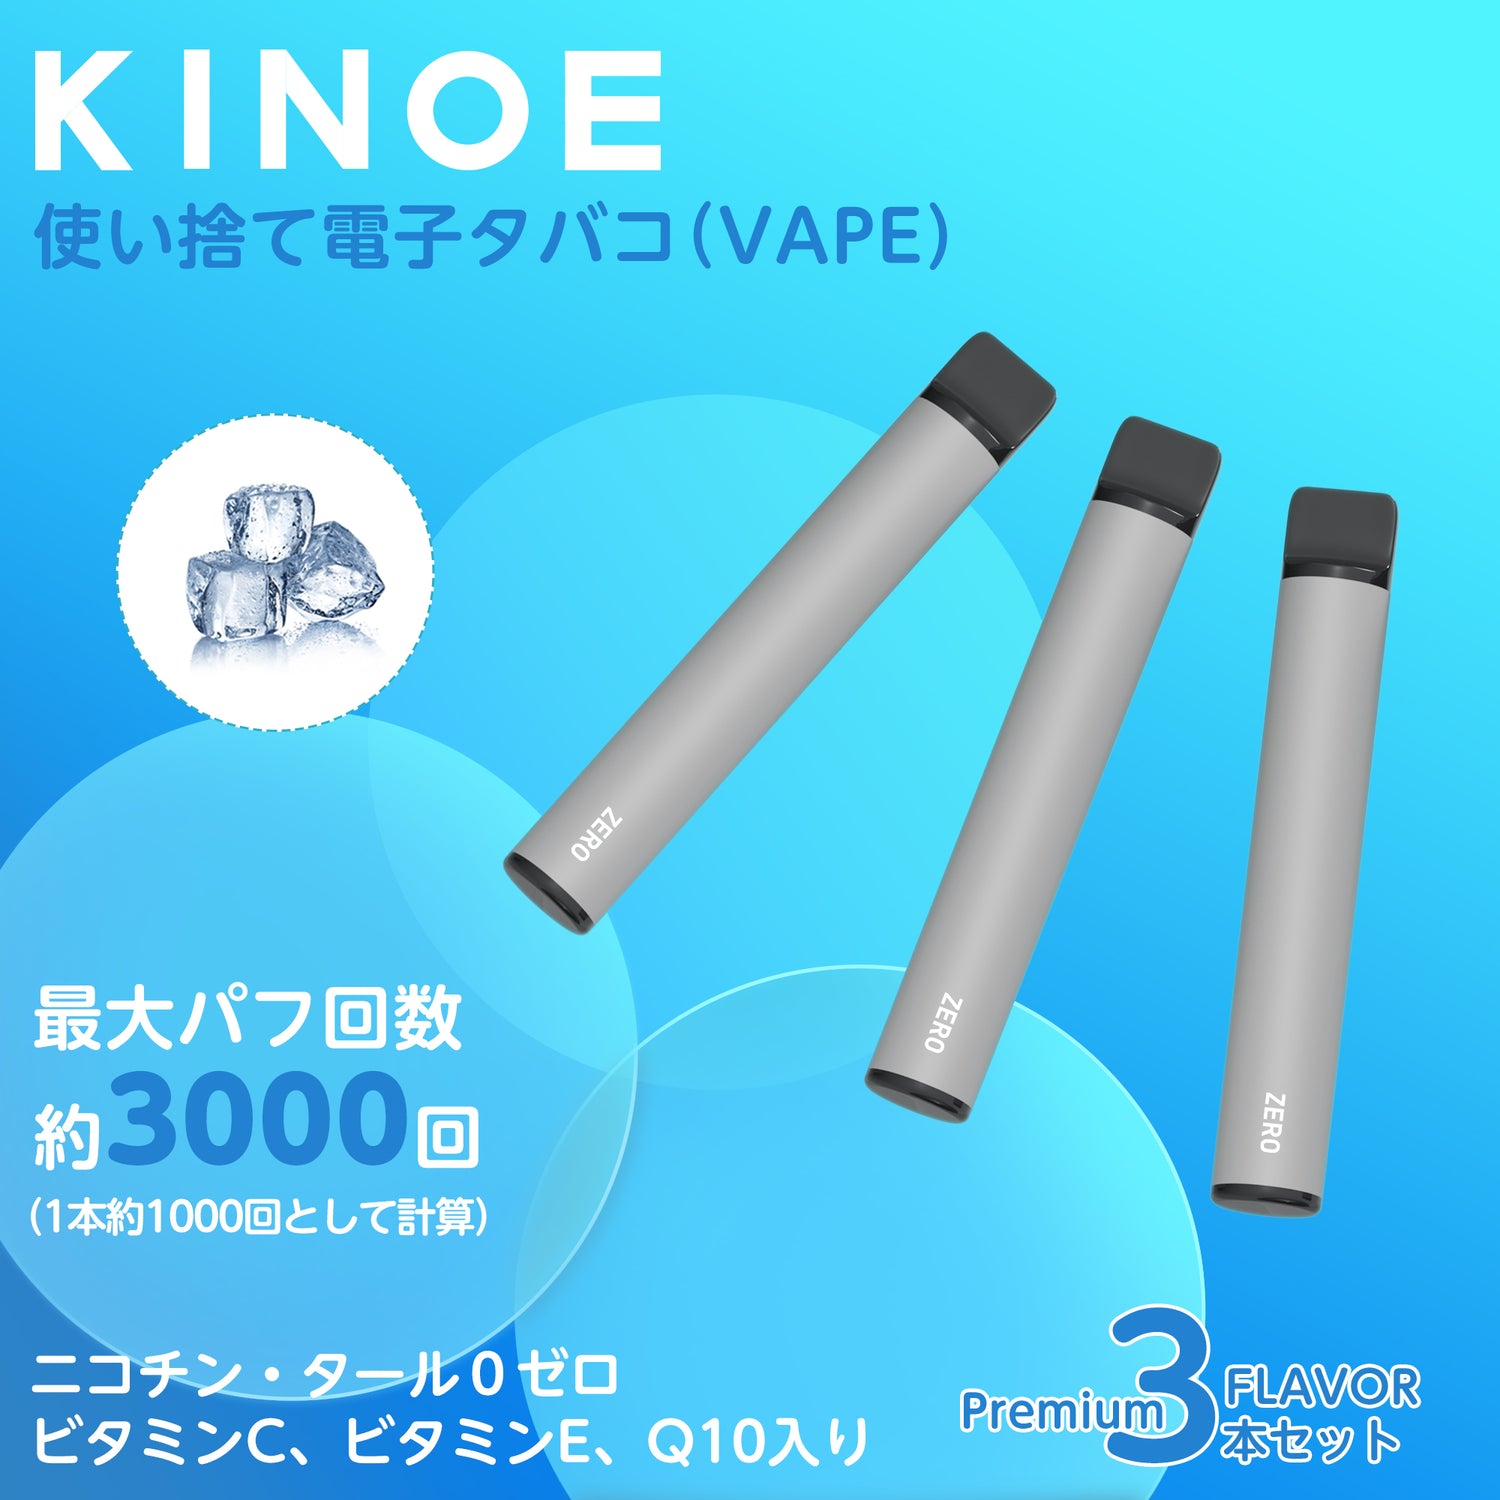 KINOE Einweg-E-Zigaretten-Set mit 3 Stück (super cooles Gefühl)